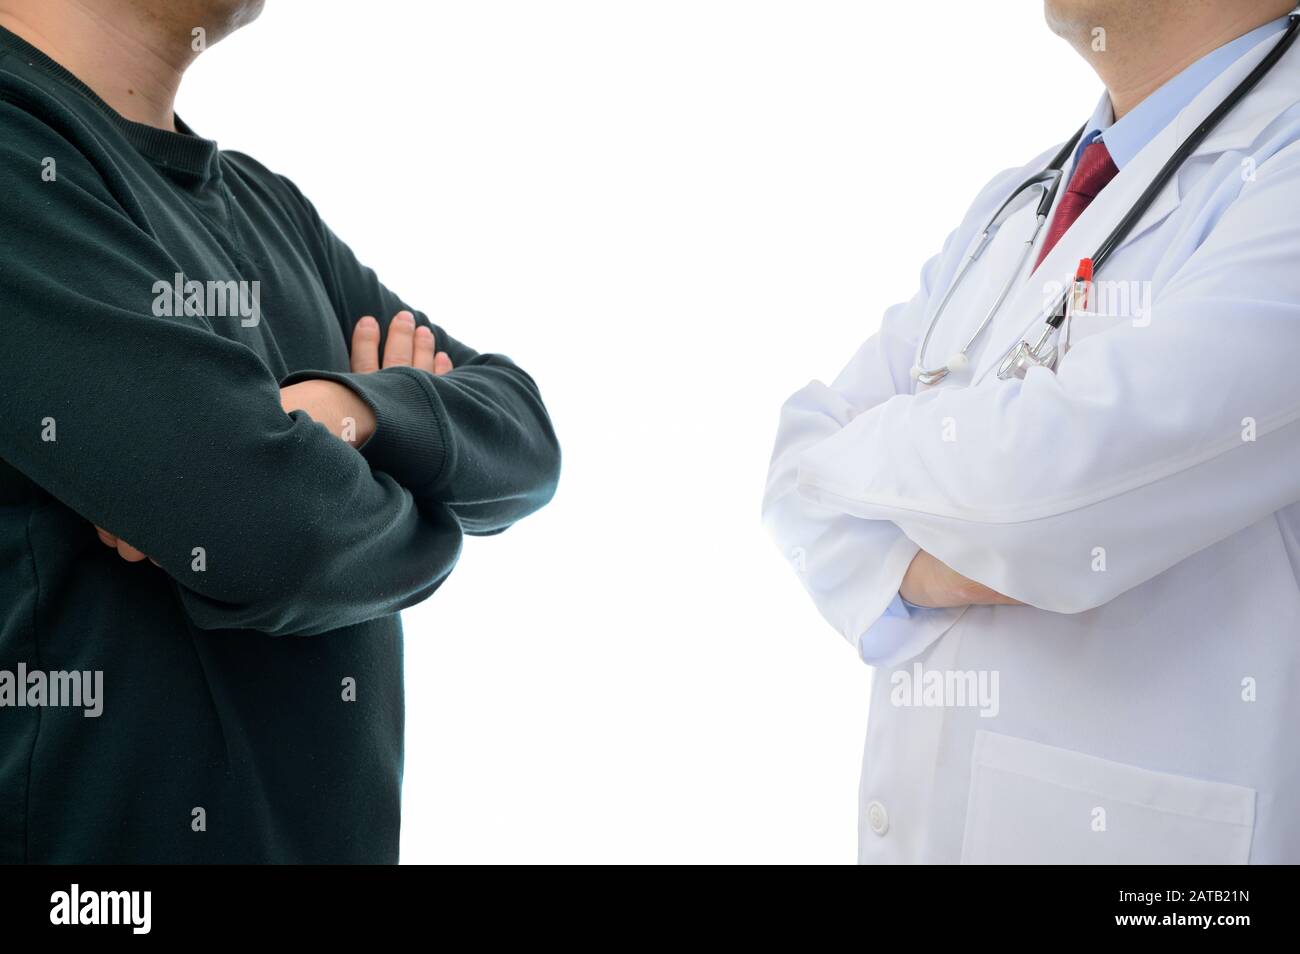 Pacientes que protestan al médico. Concepto de disputa médica Foto de stock